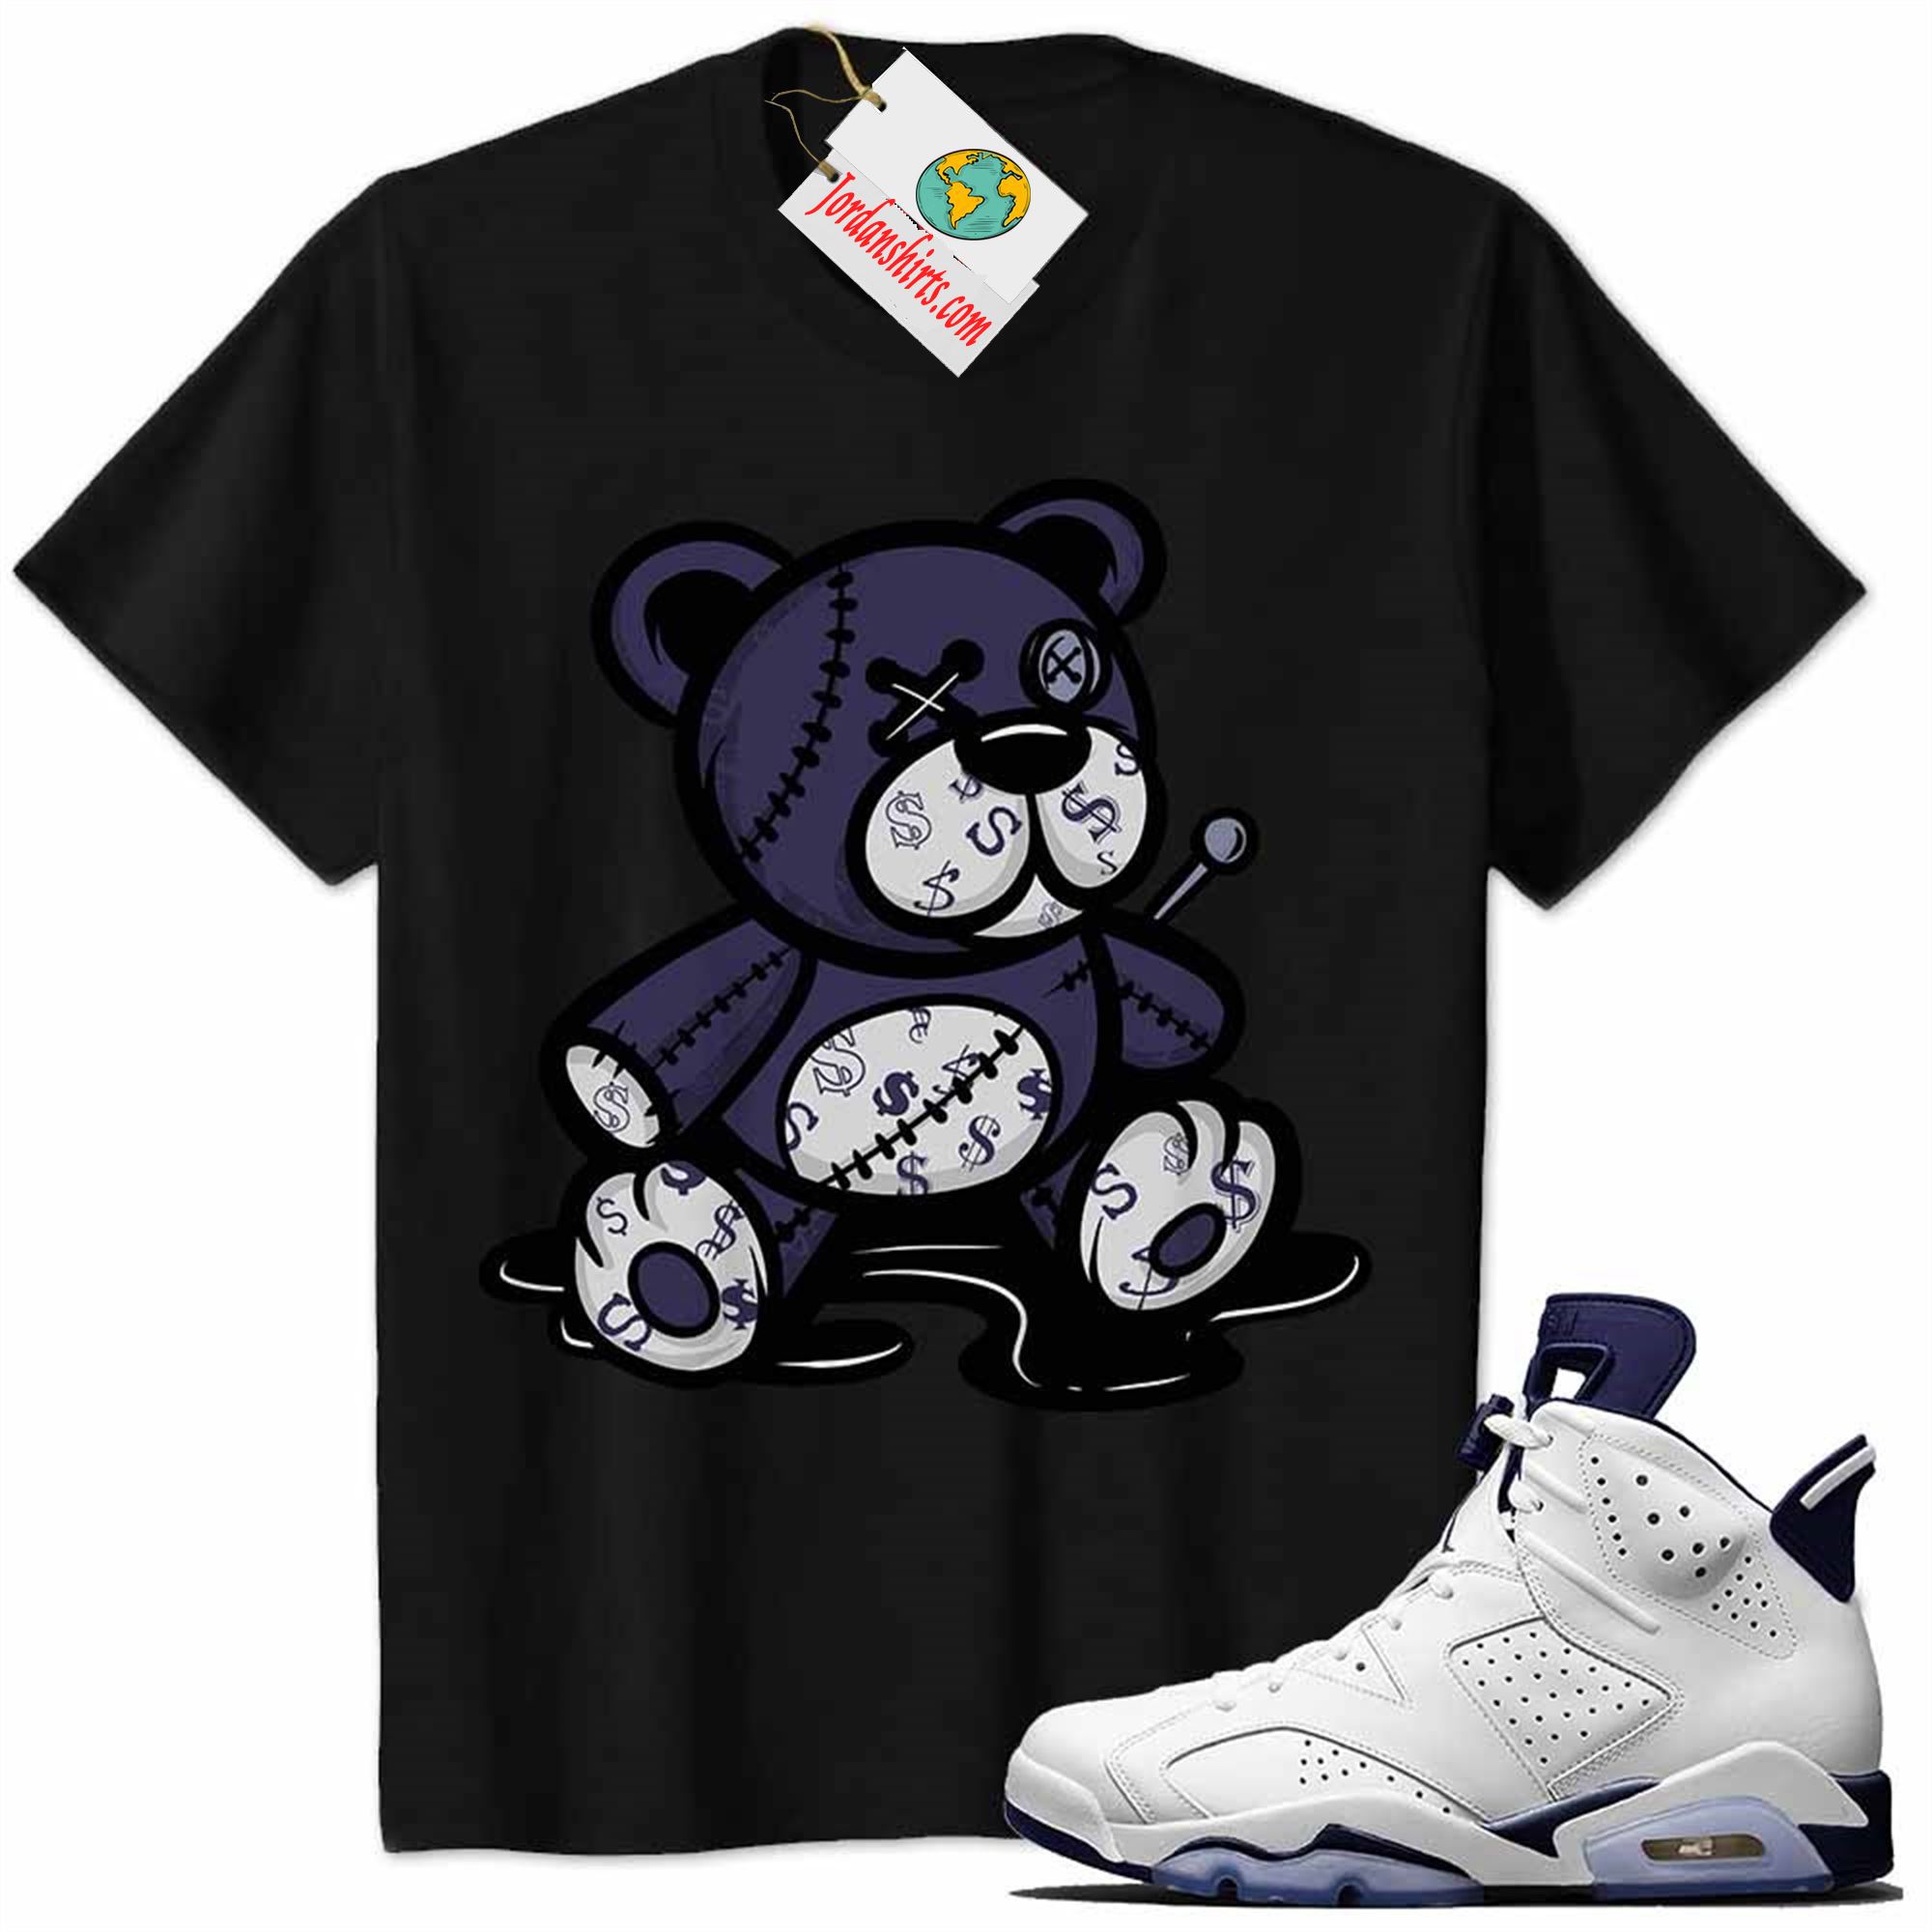 Jordan 6 Shirt, Jordan 6 Midnight Navy Shirt Teddy Bear All Money In Black Full Size Up To 5xl